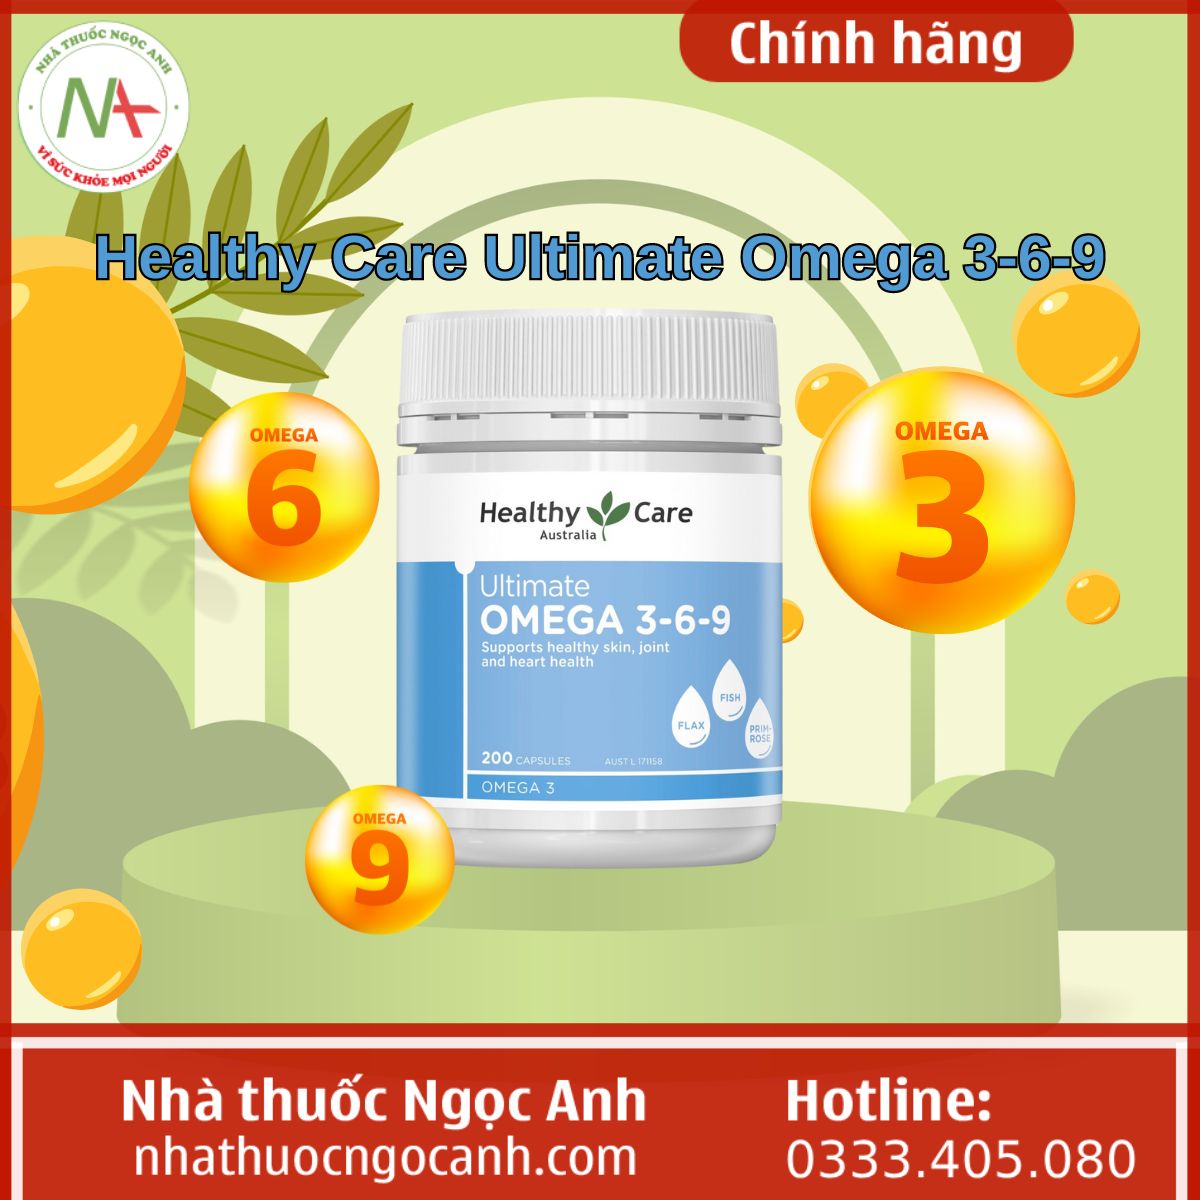 Healthy Care Ultimate Omega 3-6-9 tăng cường sức khỏe